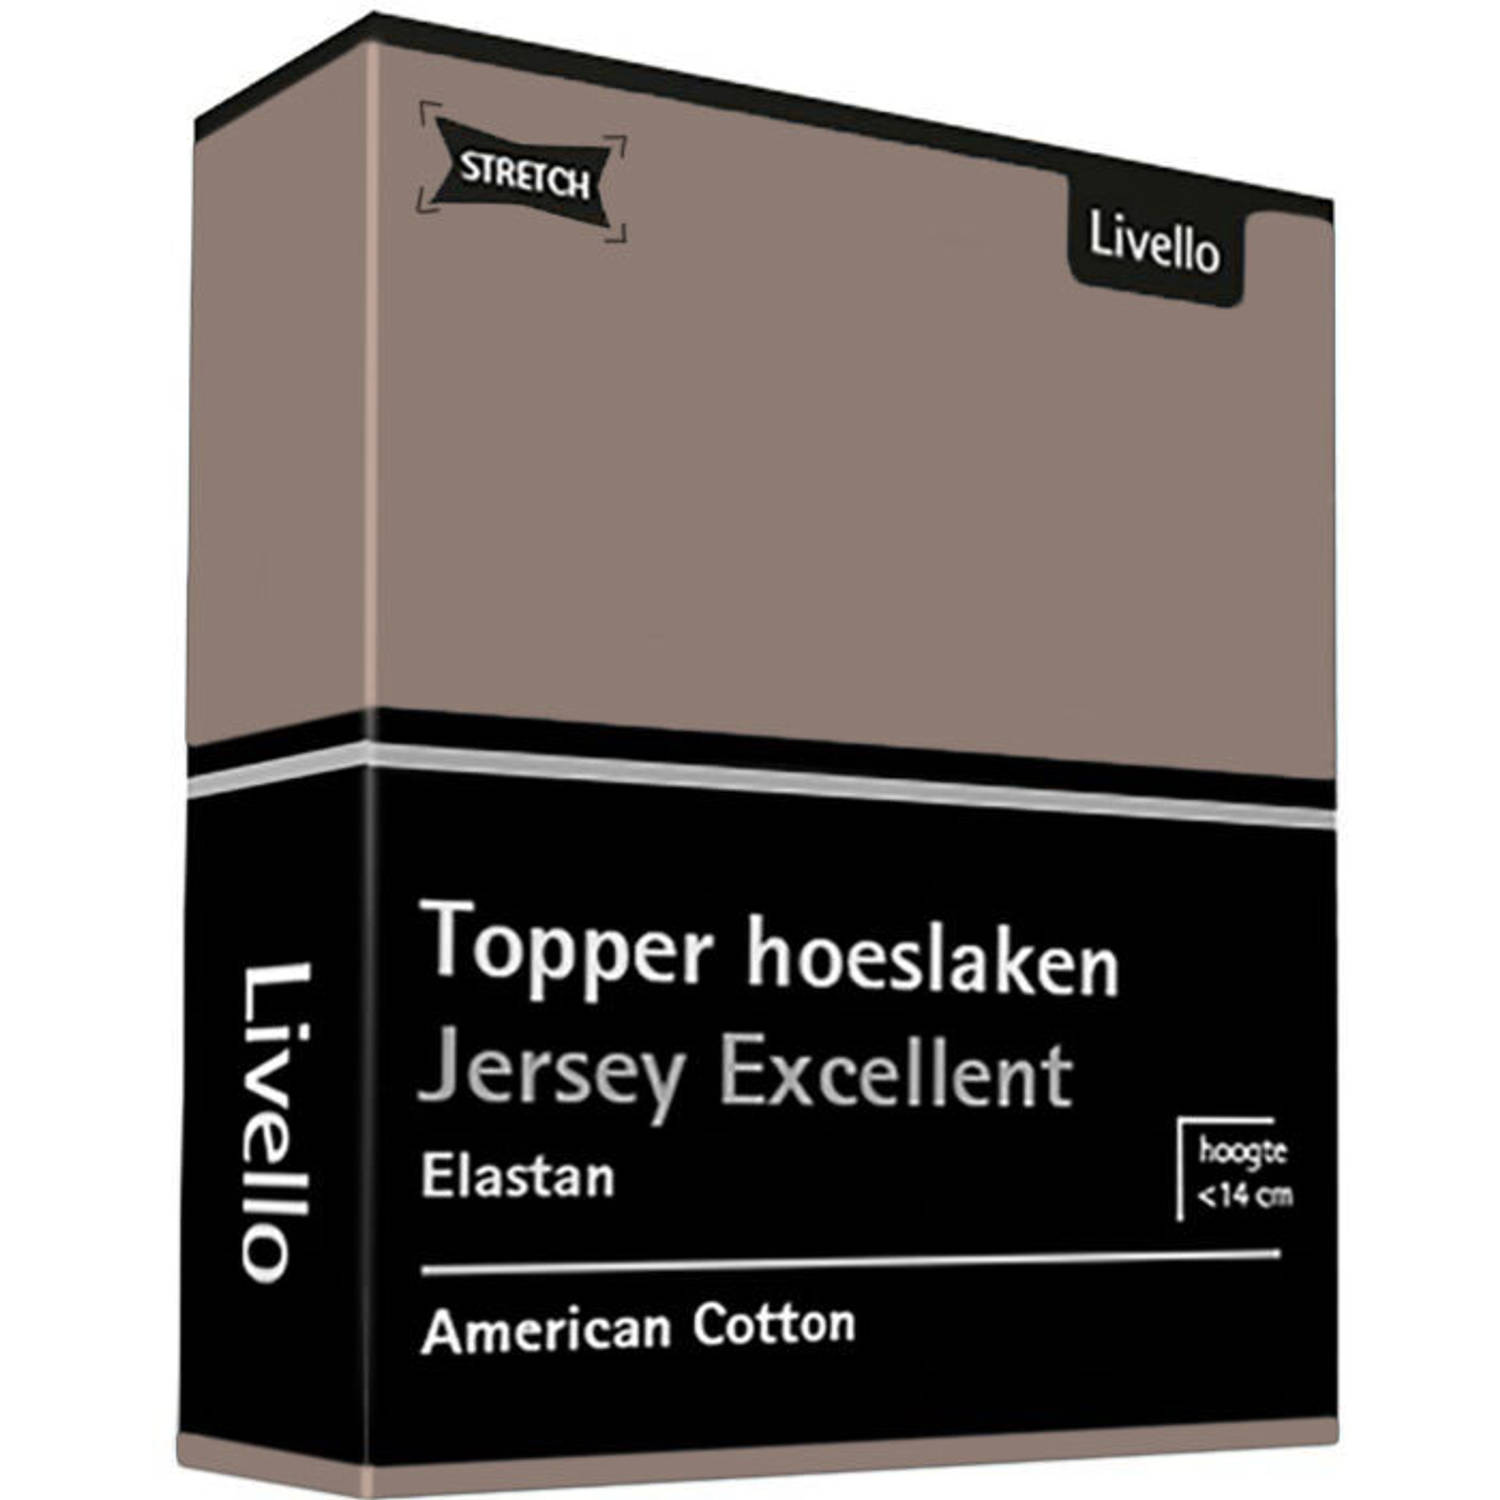 Livello Hoeslaken Topper Jersey Excellent - 140x200